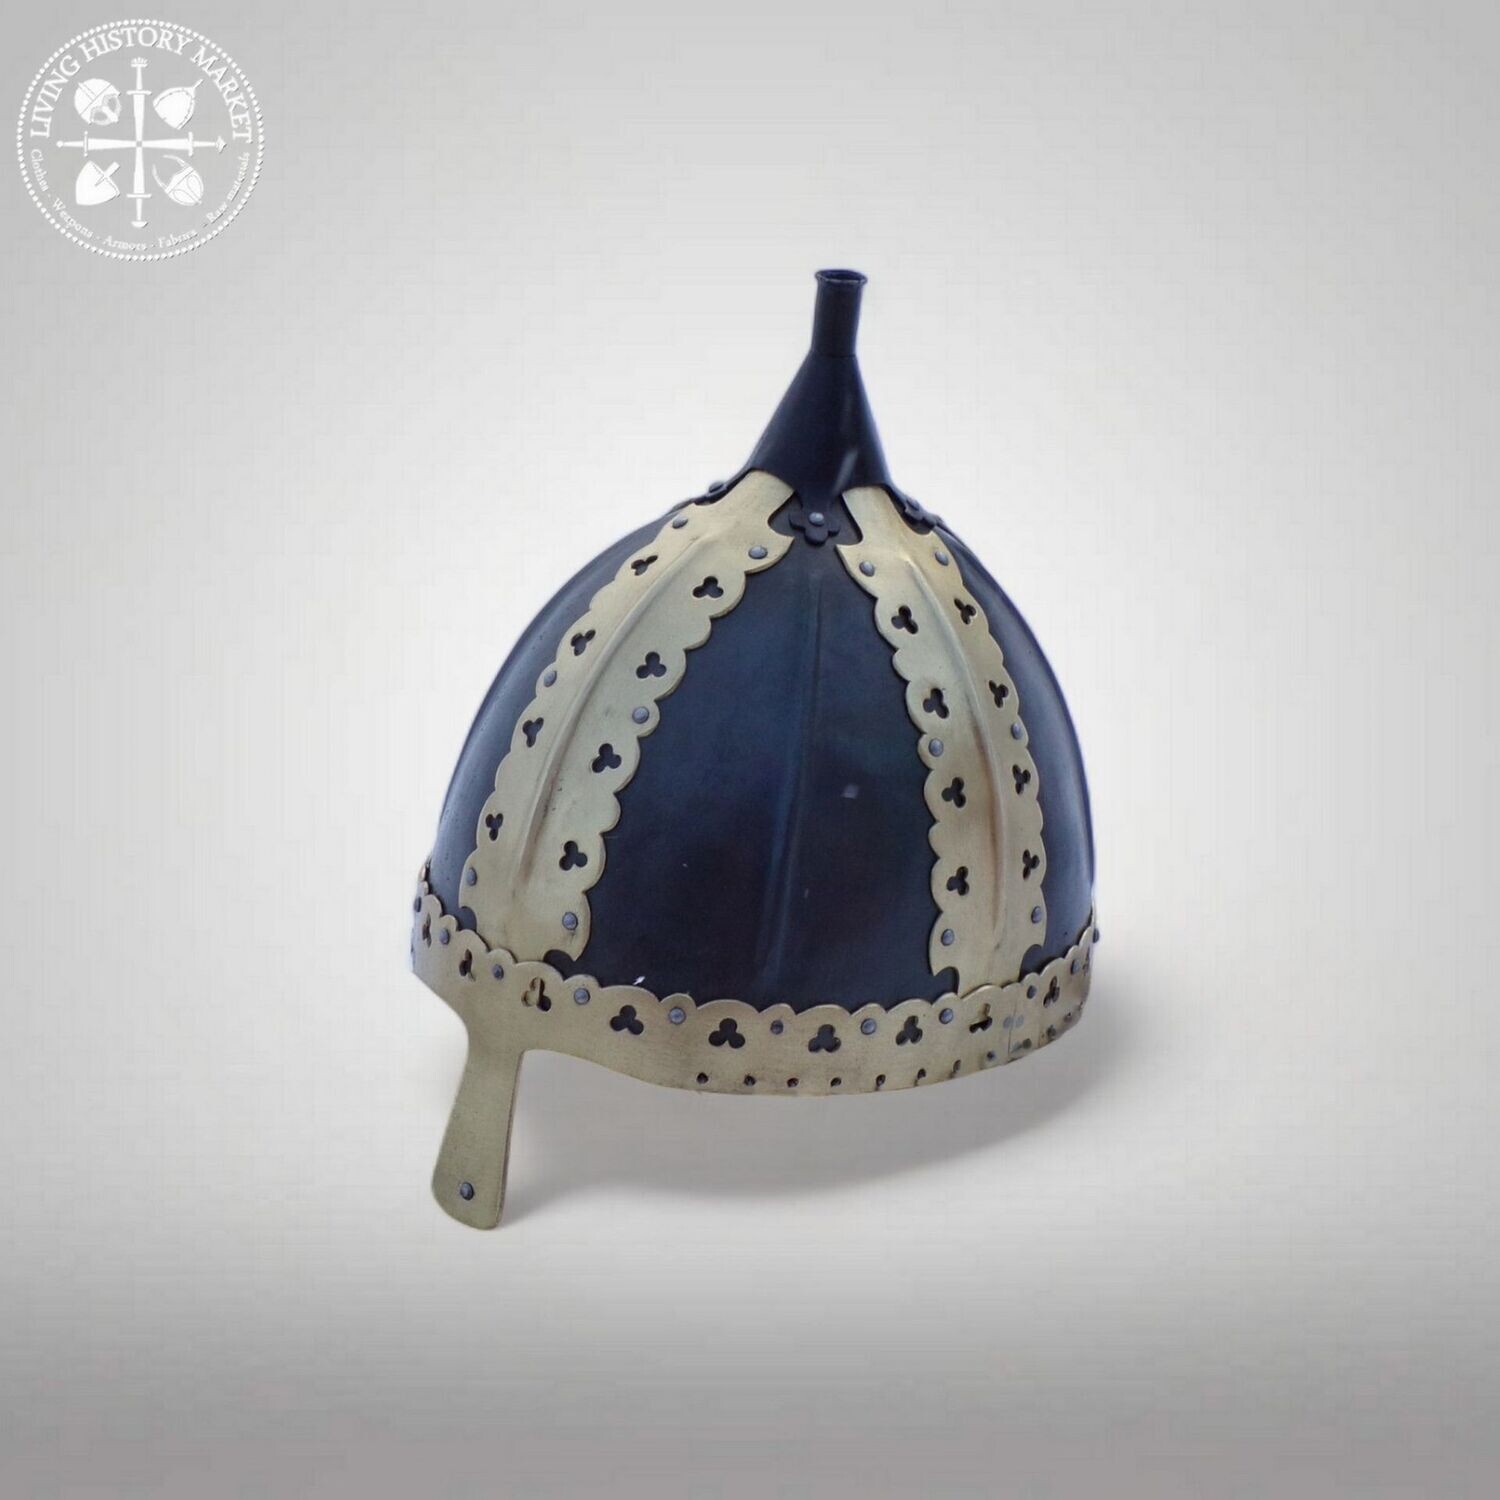 Gnezdovo type 2A helmet - 9-10th century